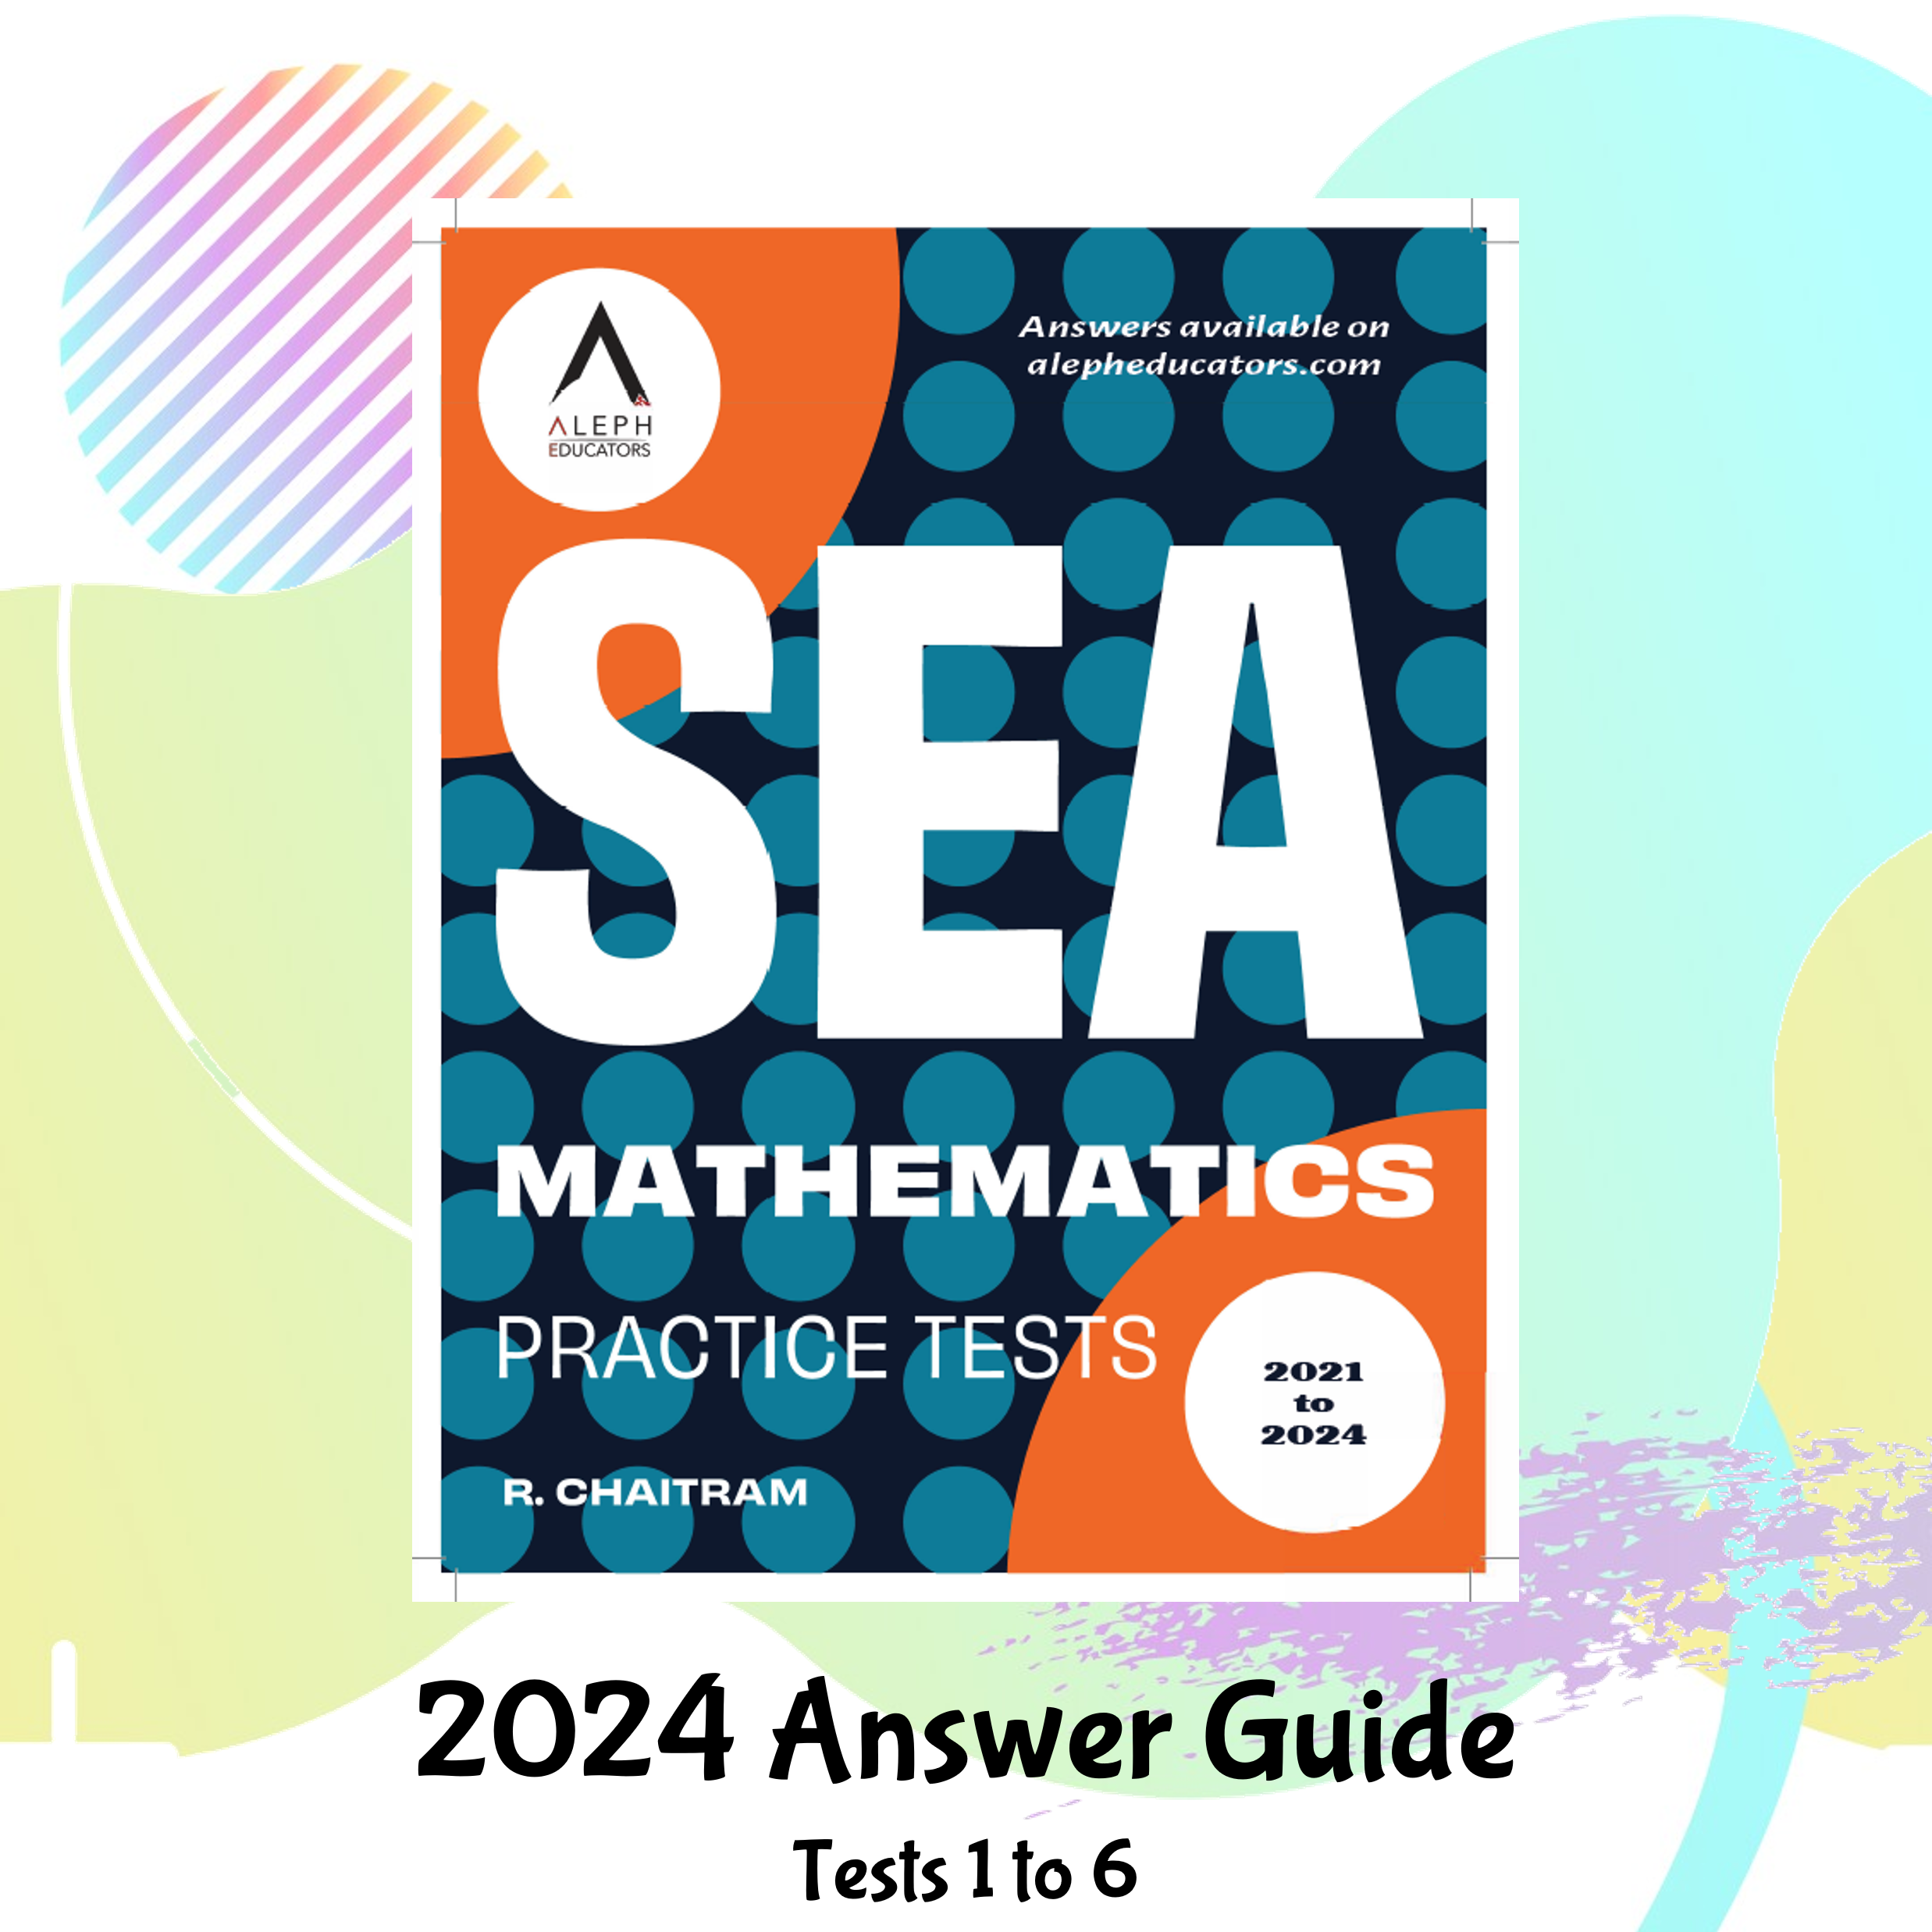 Aleph Educators 2021 Mathematics Answer Guide Test 1